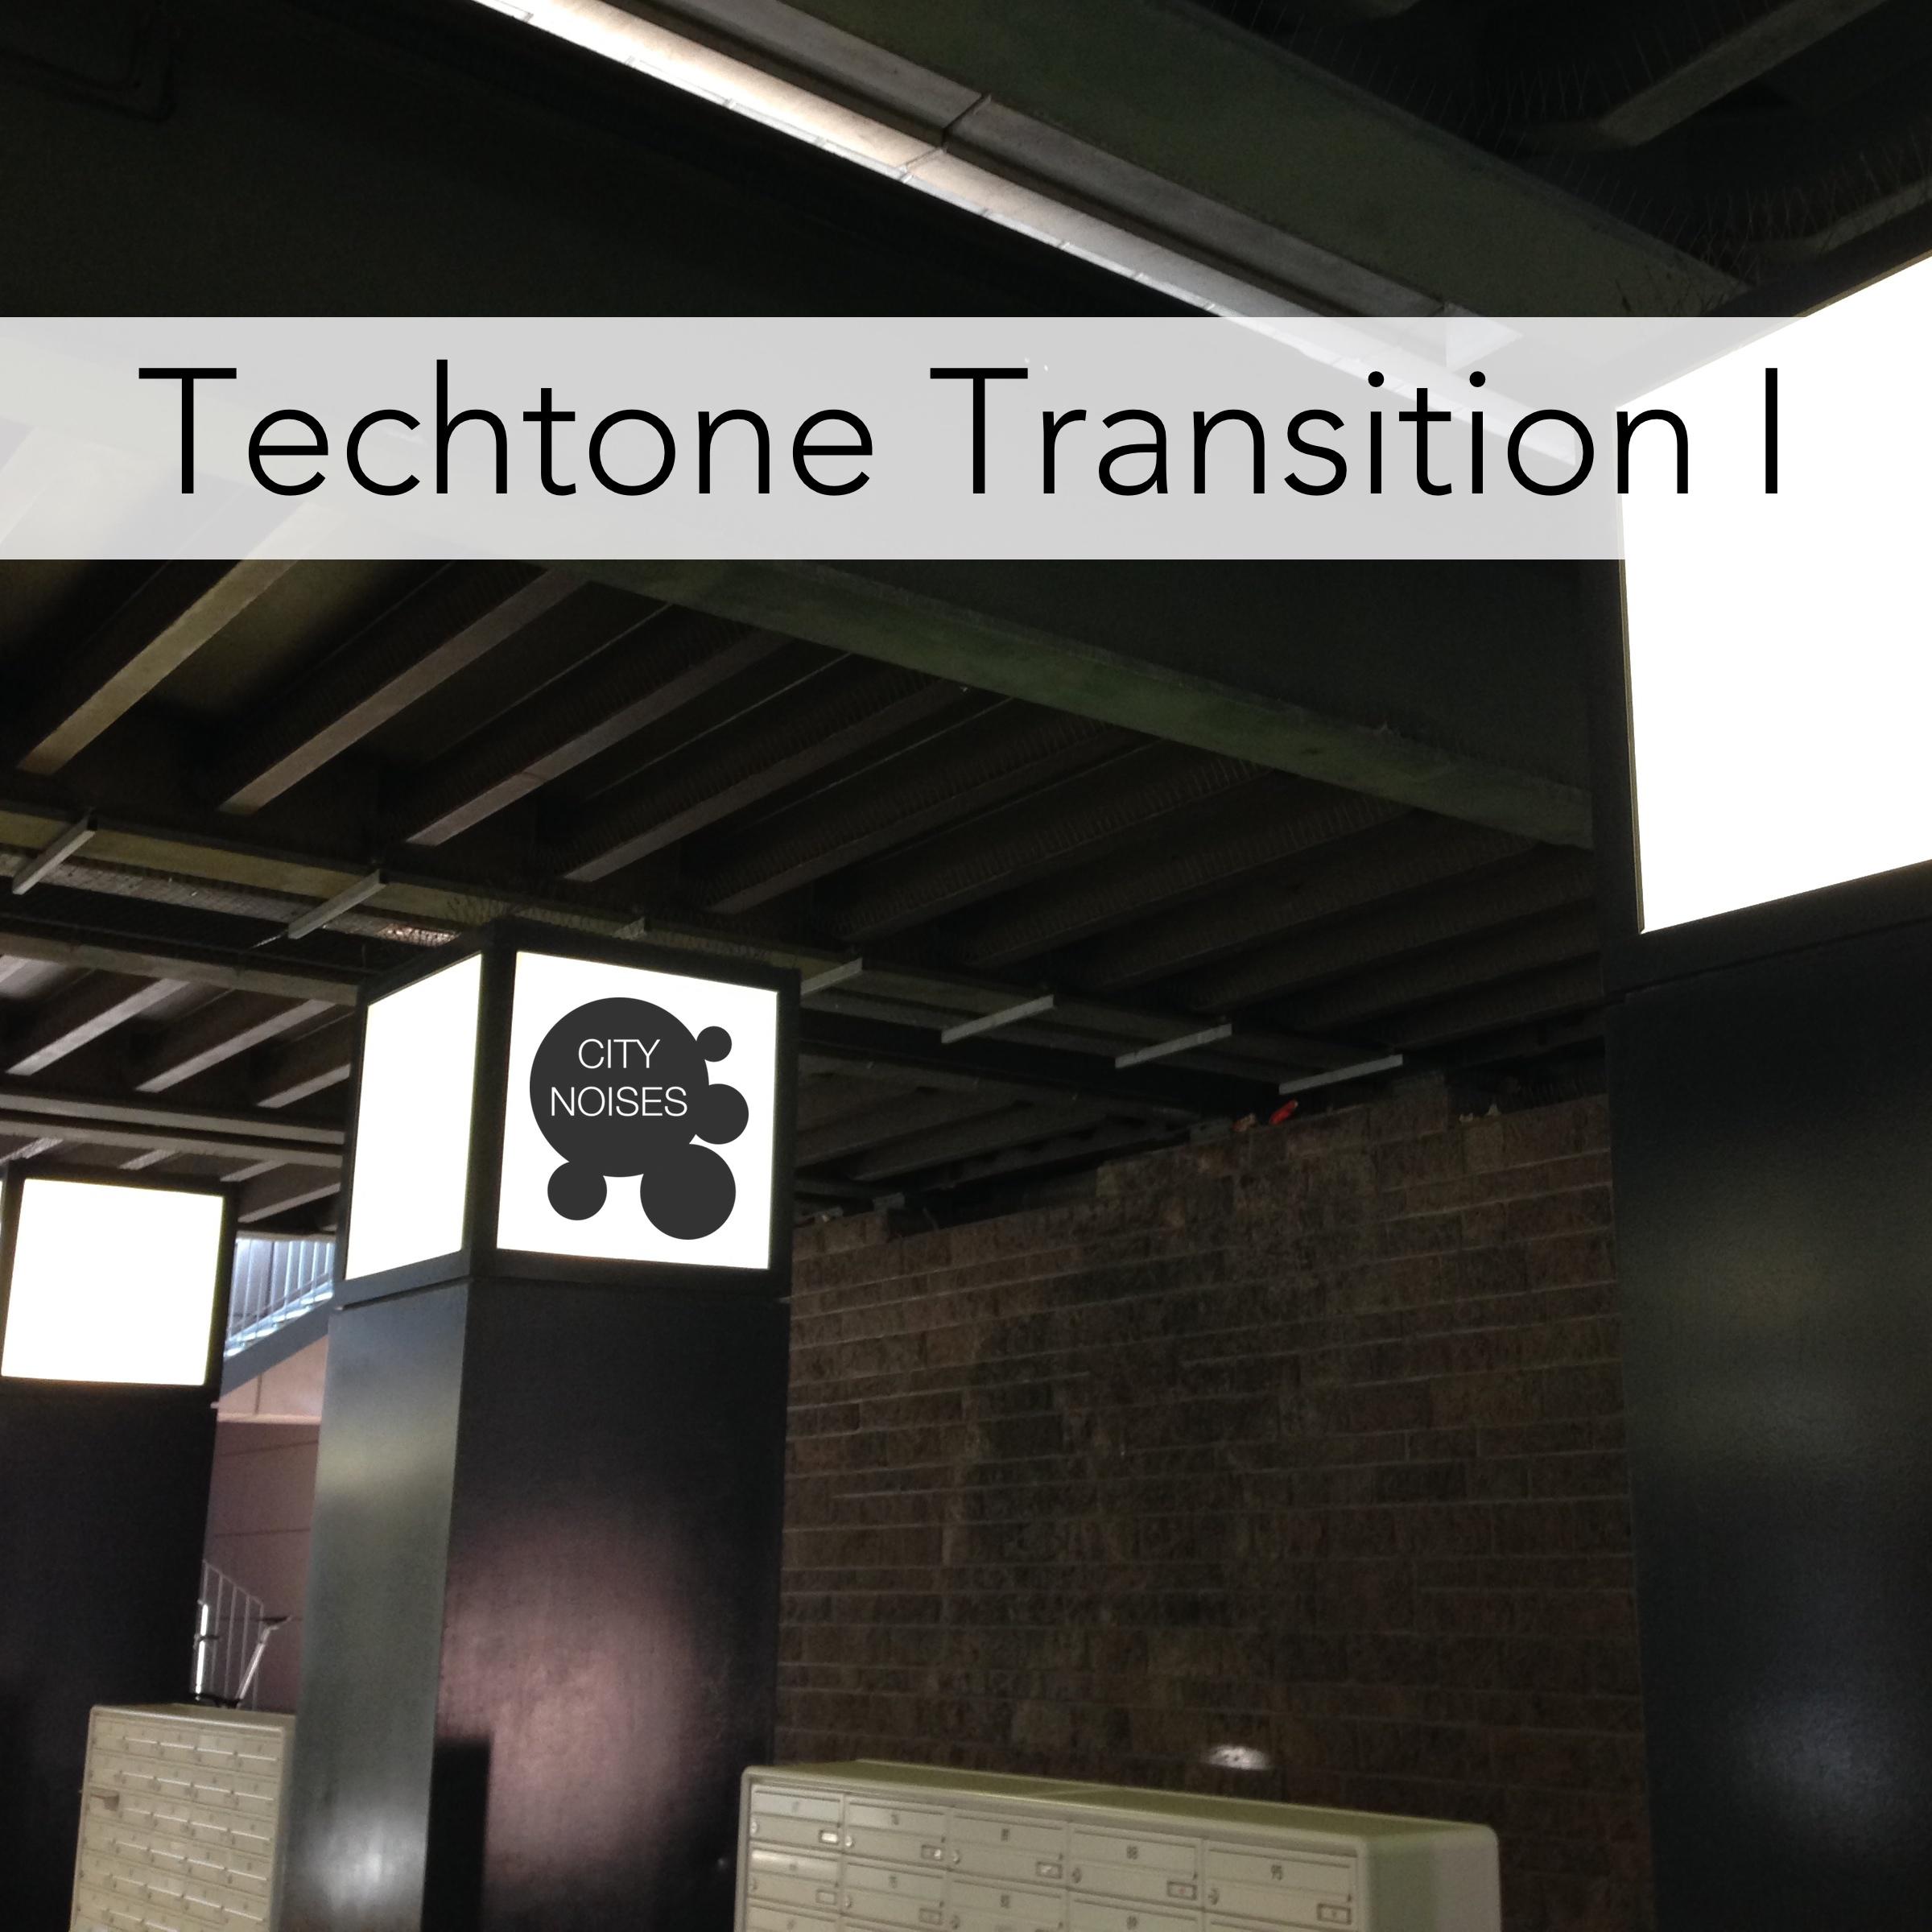 Techtone Transition I